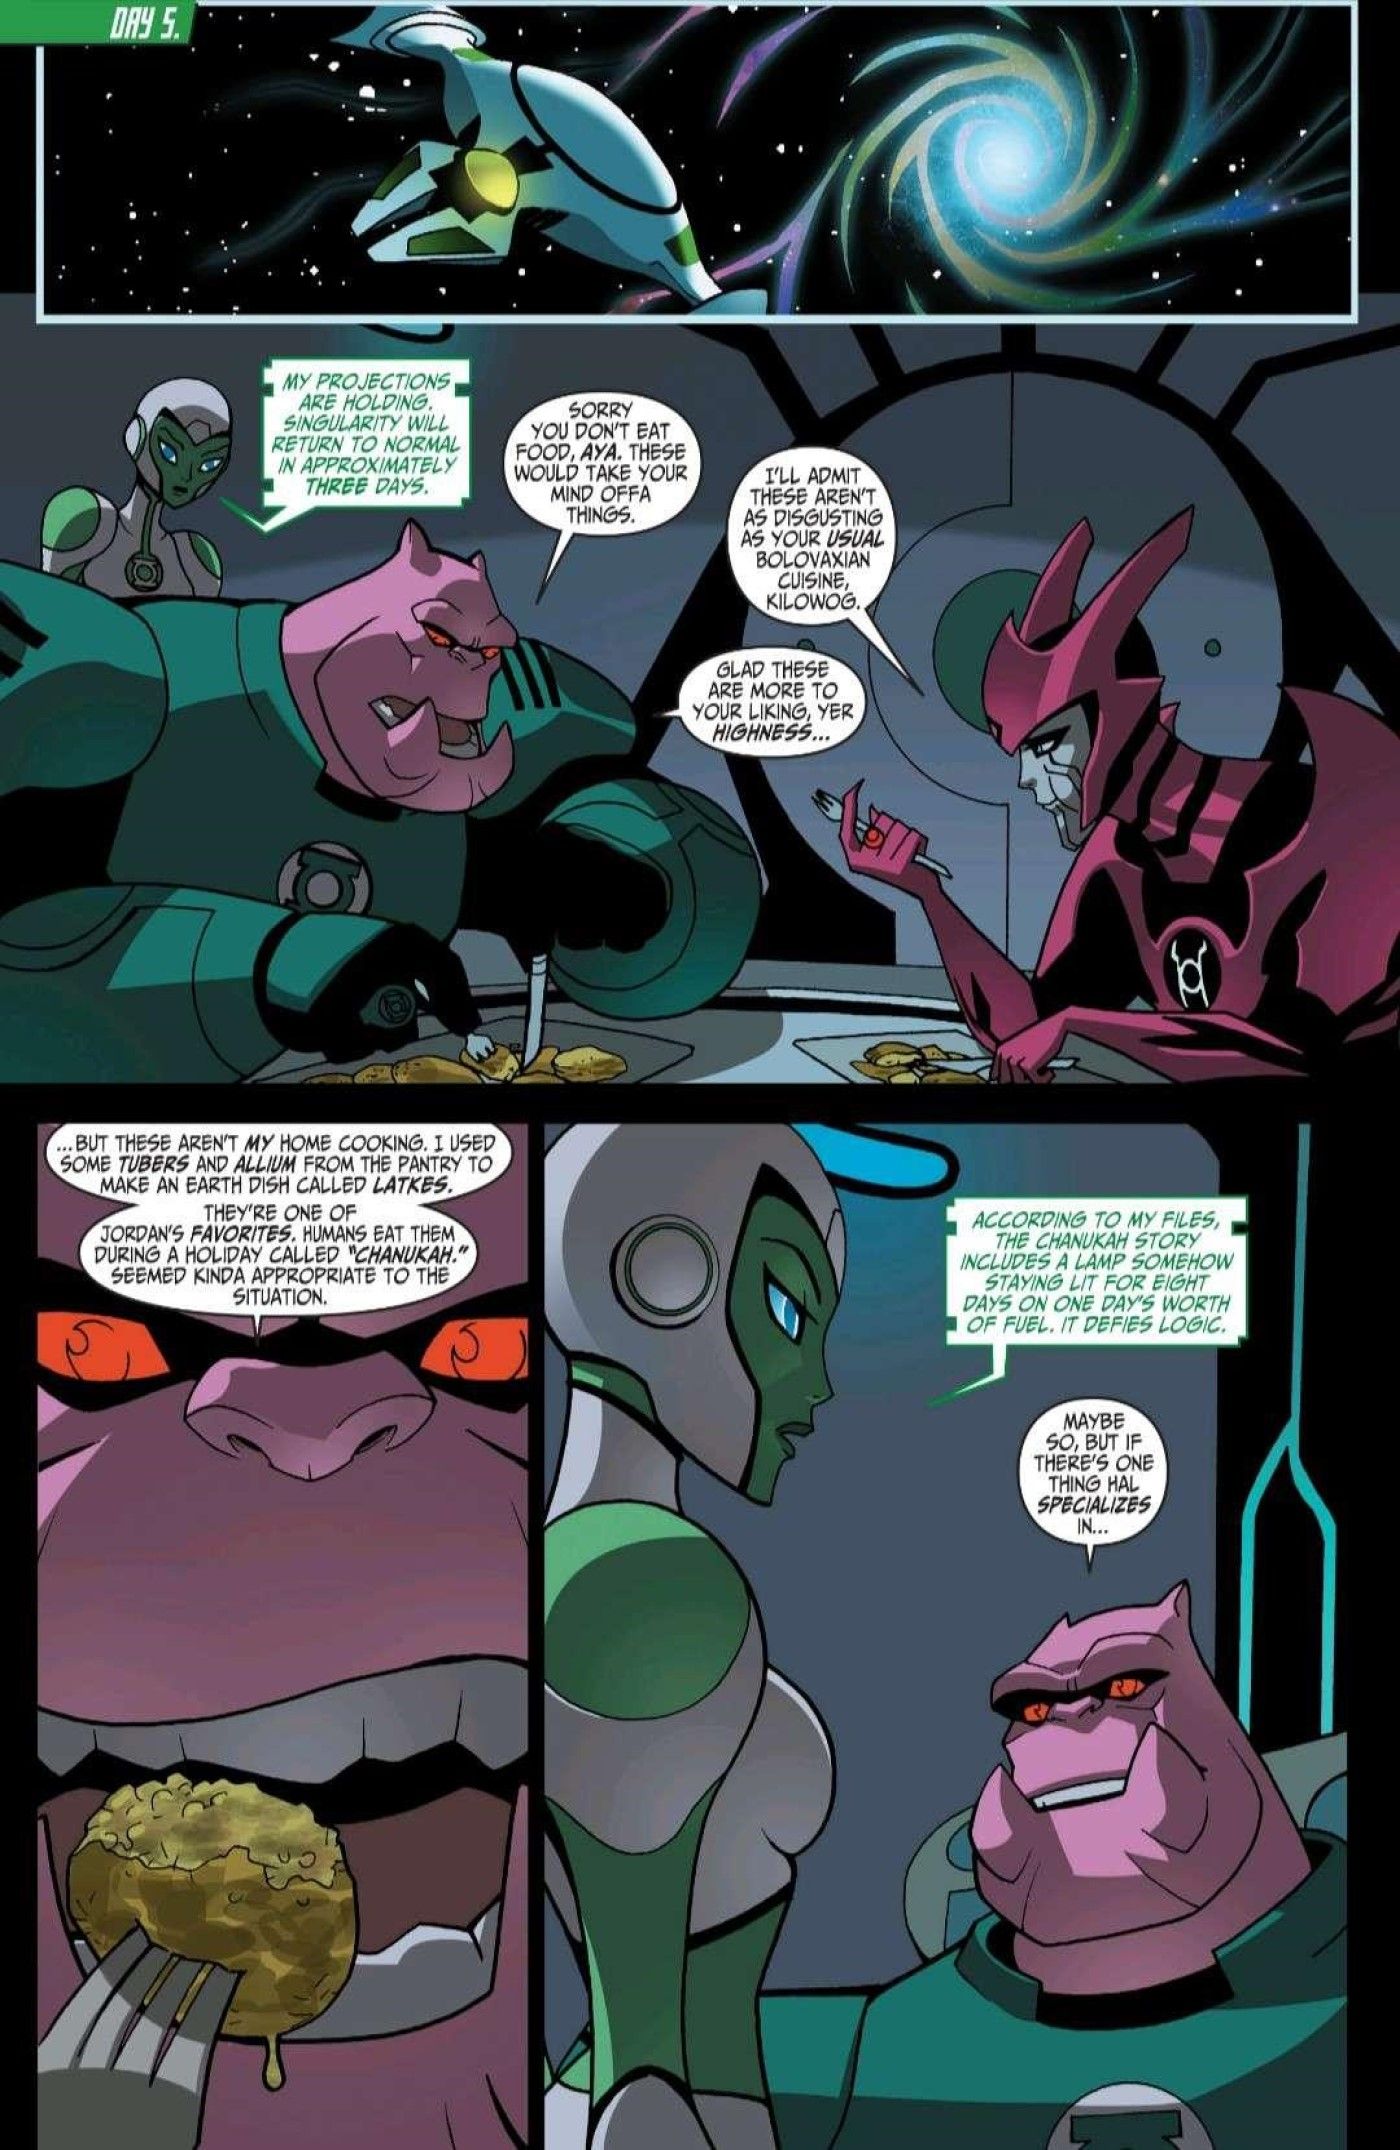 Kilowog cooks latkes in Green Lantern TAS issue 8.